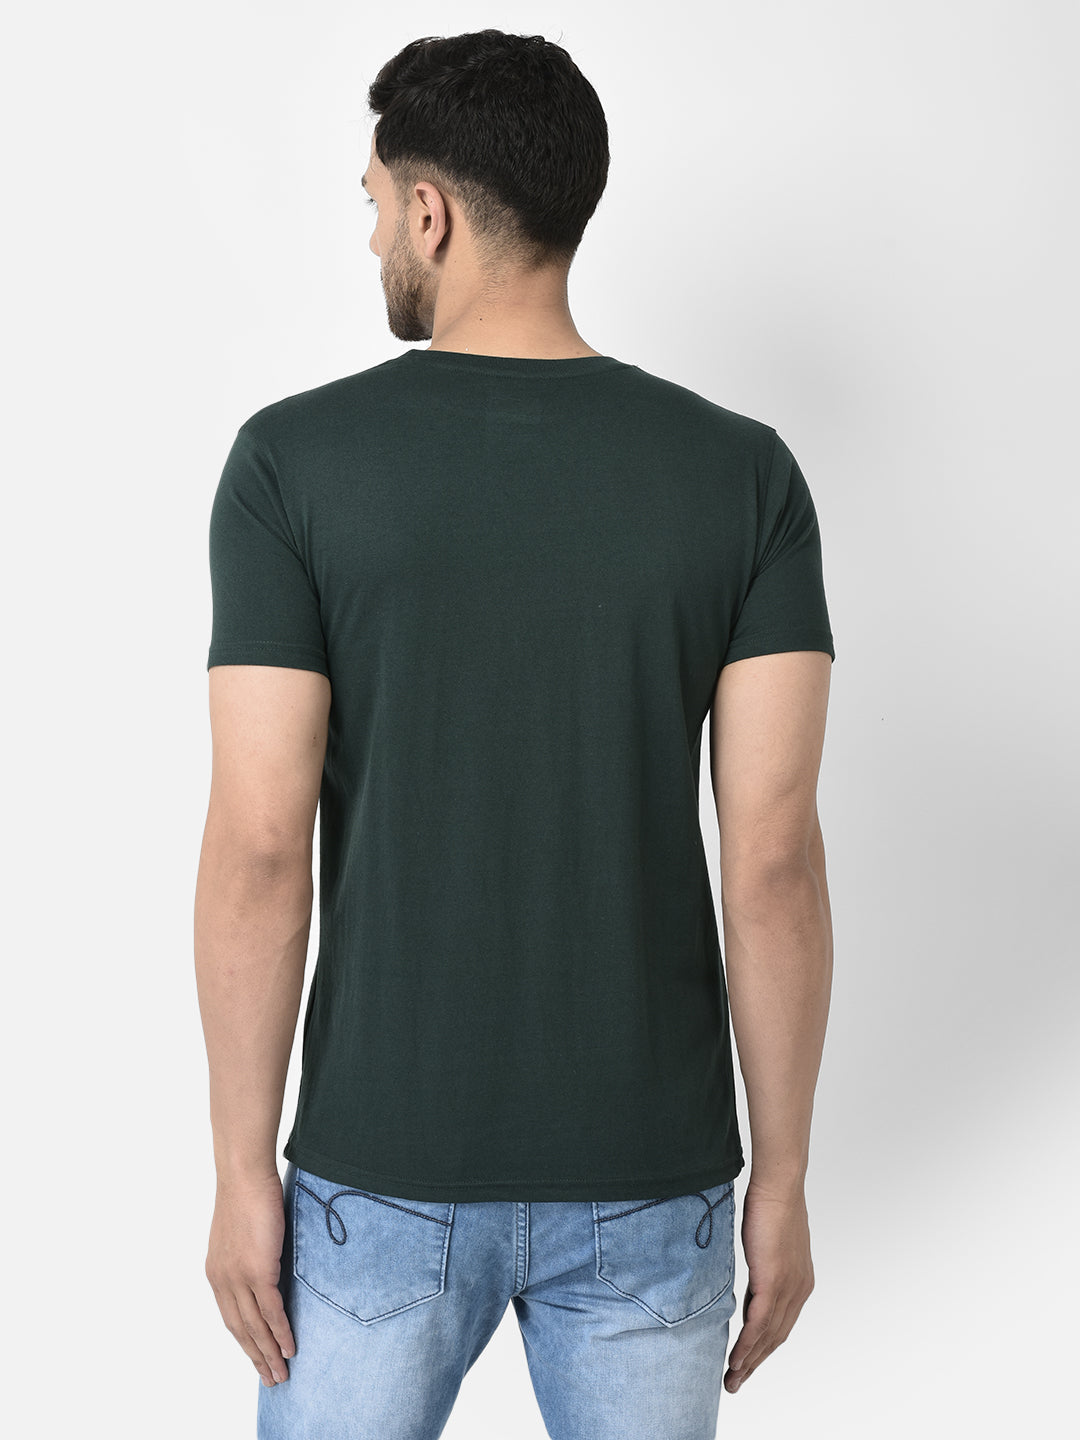 Cobb Bottle Green Printed Round Neck T-Shirt